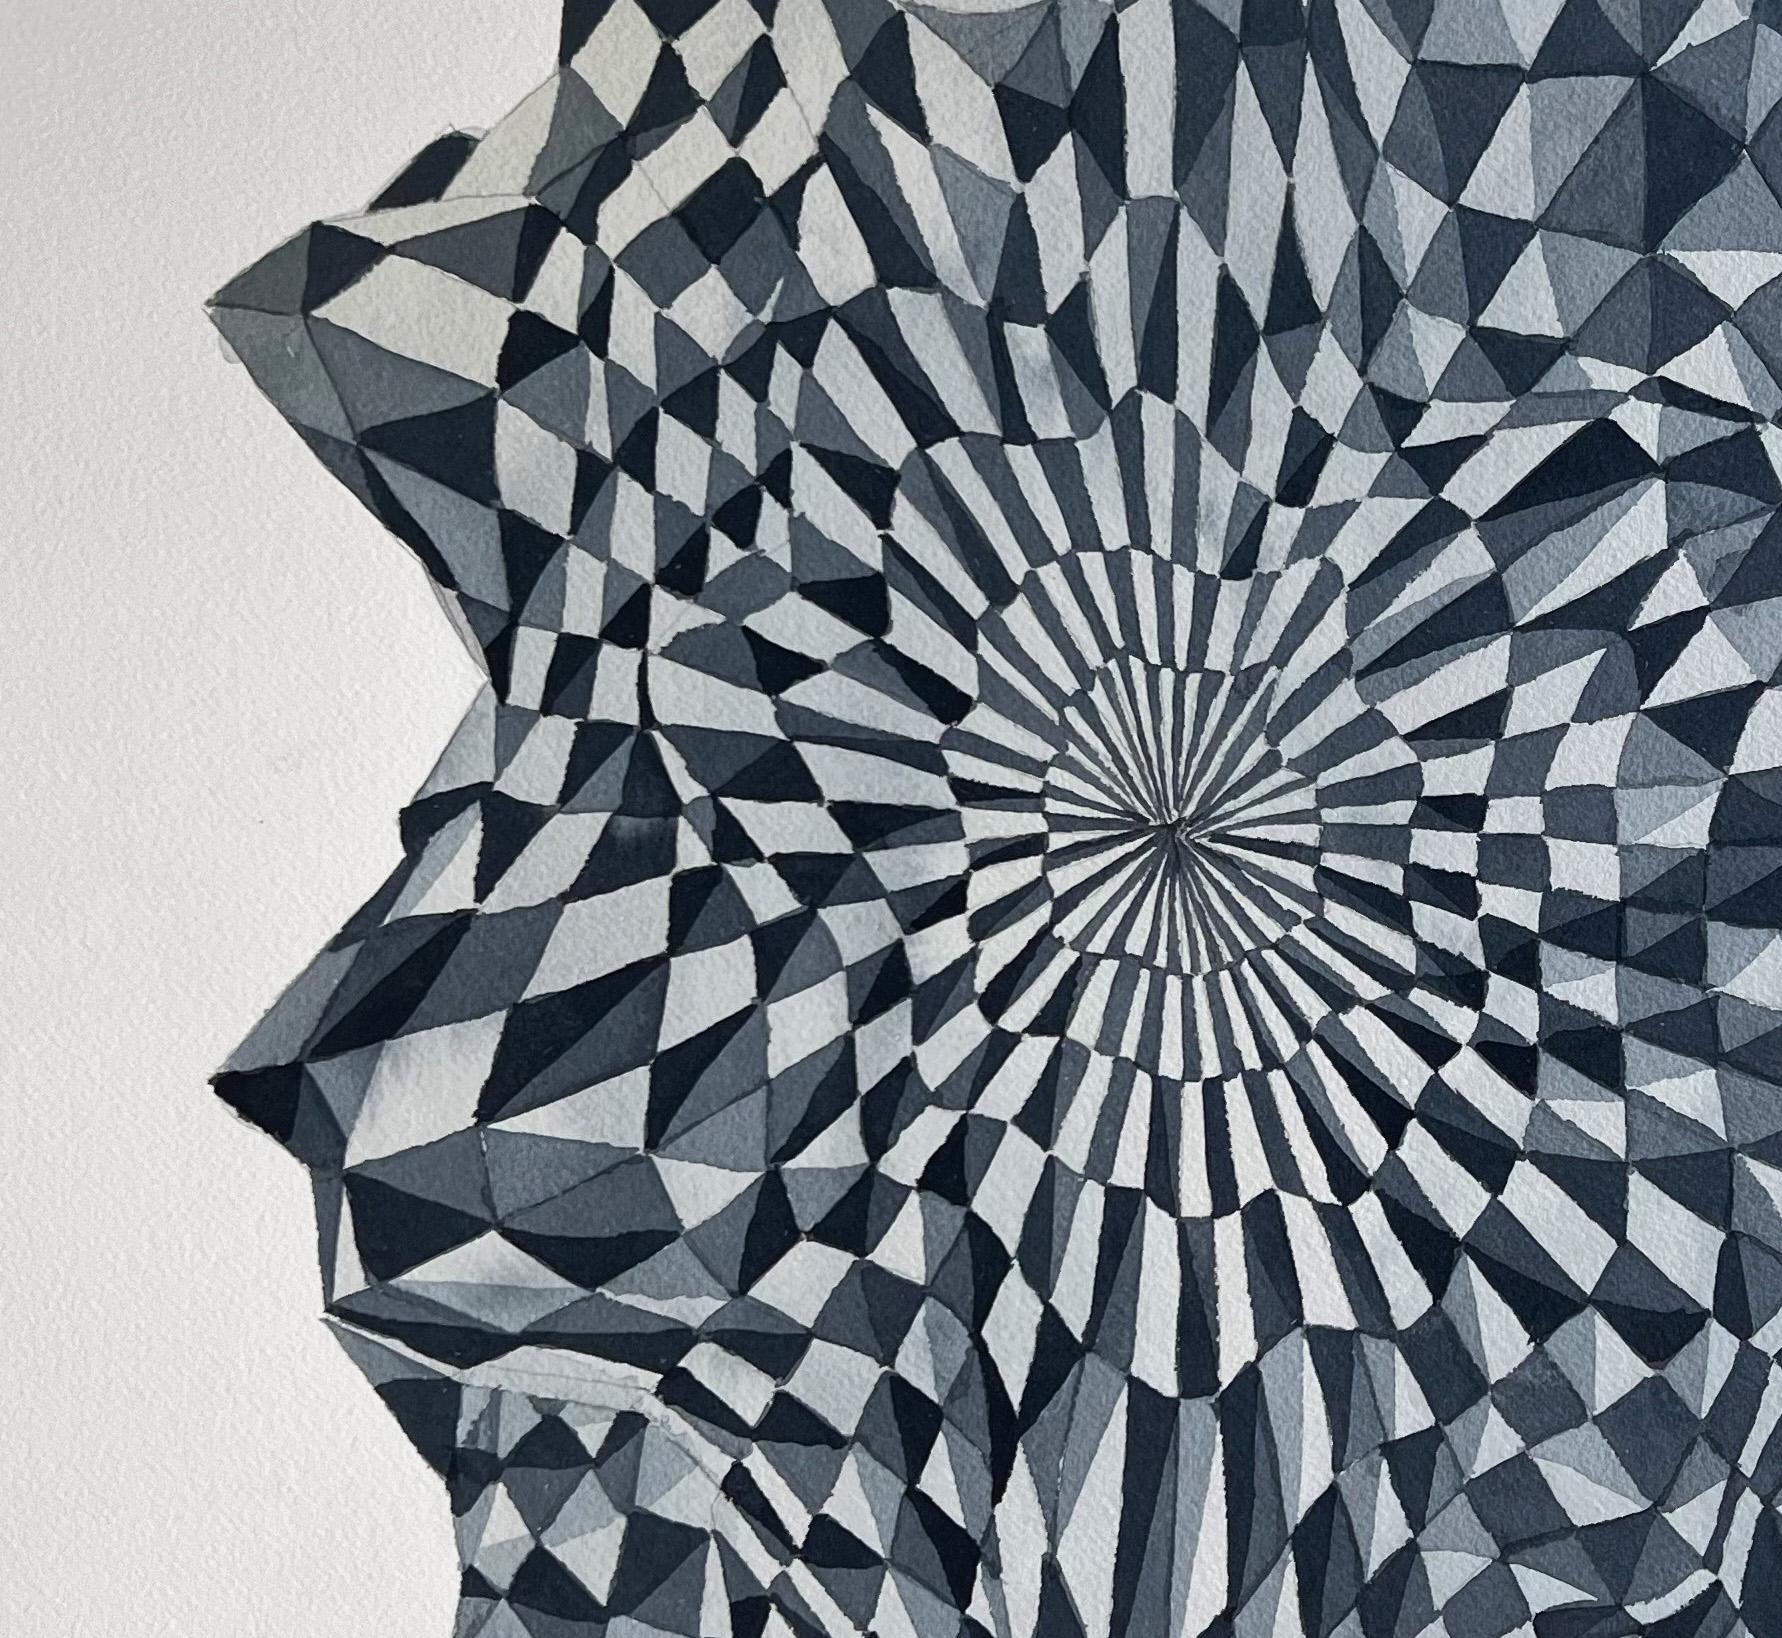 Geometría fractal 3. Das Gedächtnis der Narzisse.  Aquarellmalerei (Grau), Abstract Drawing, von James Bonachea Guerra